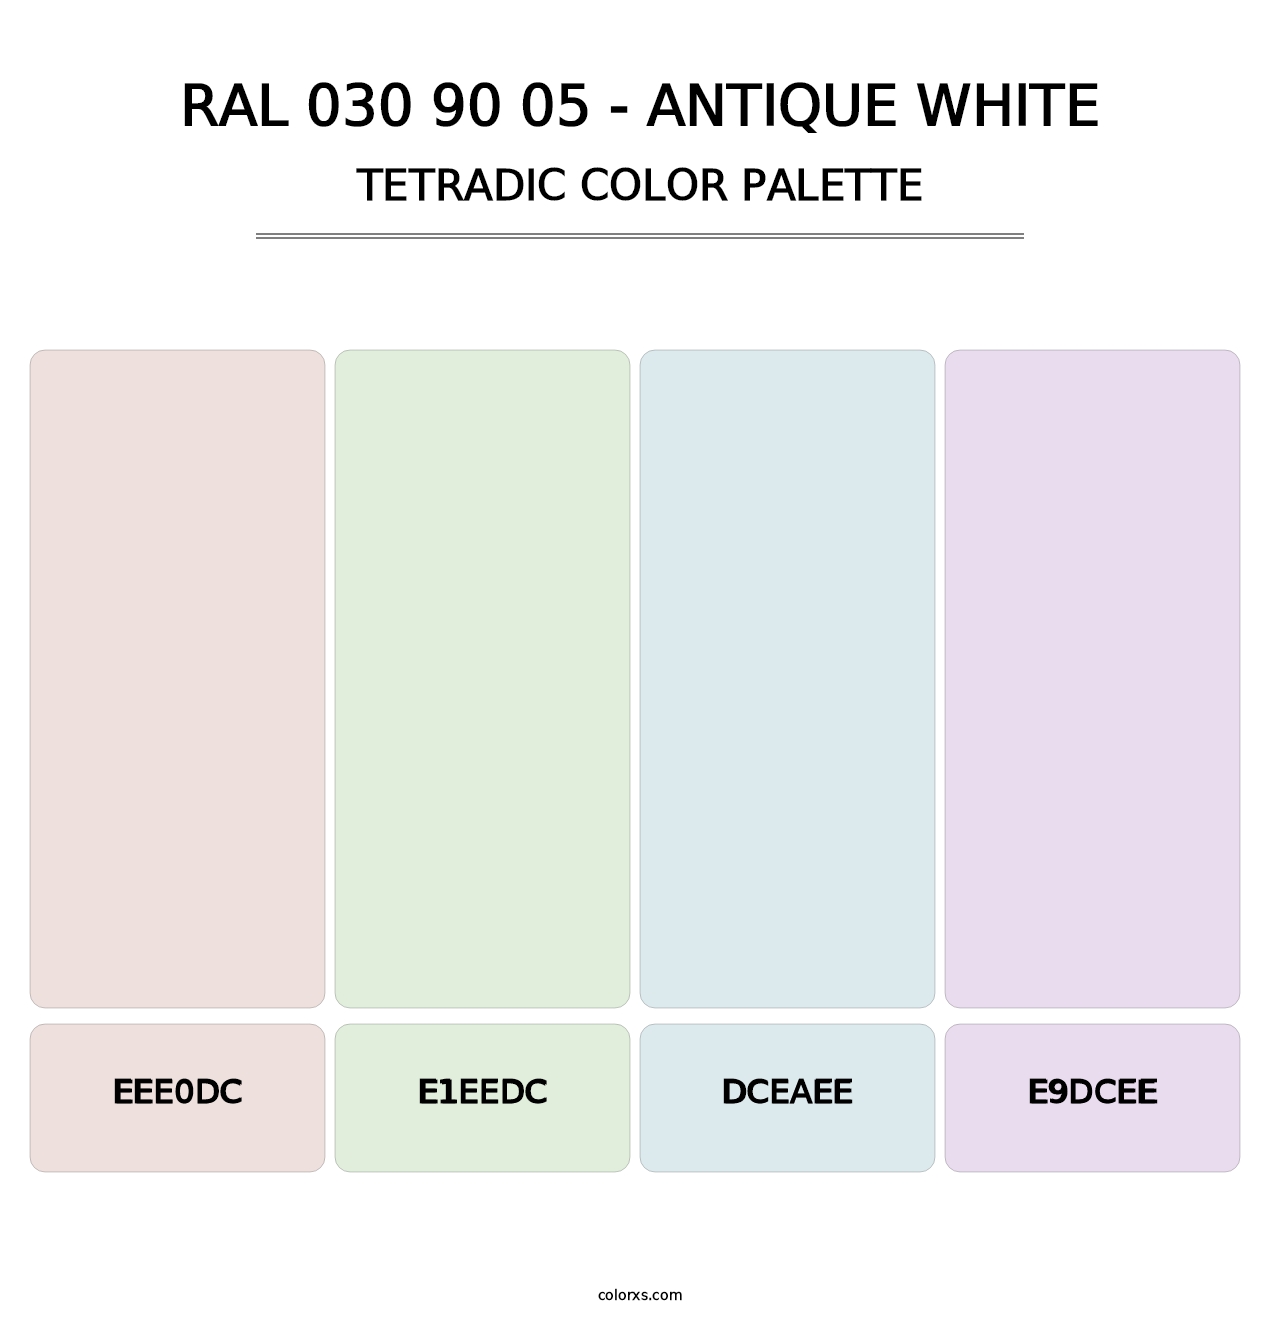 RAL 030 90 05 - Antique White - Tetradic Color Palette